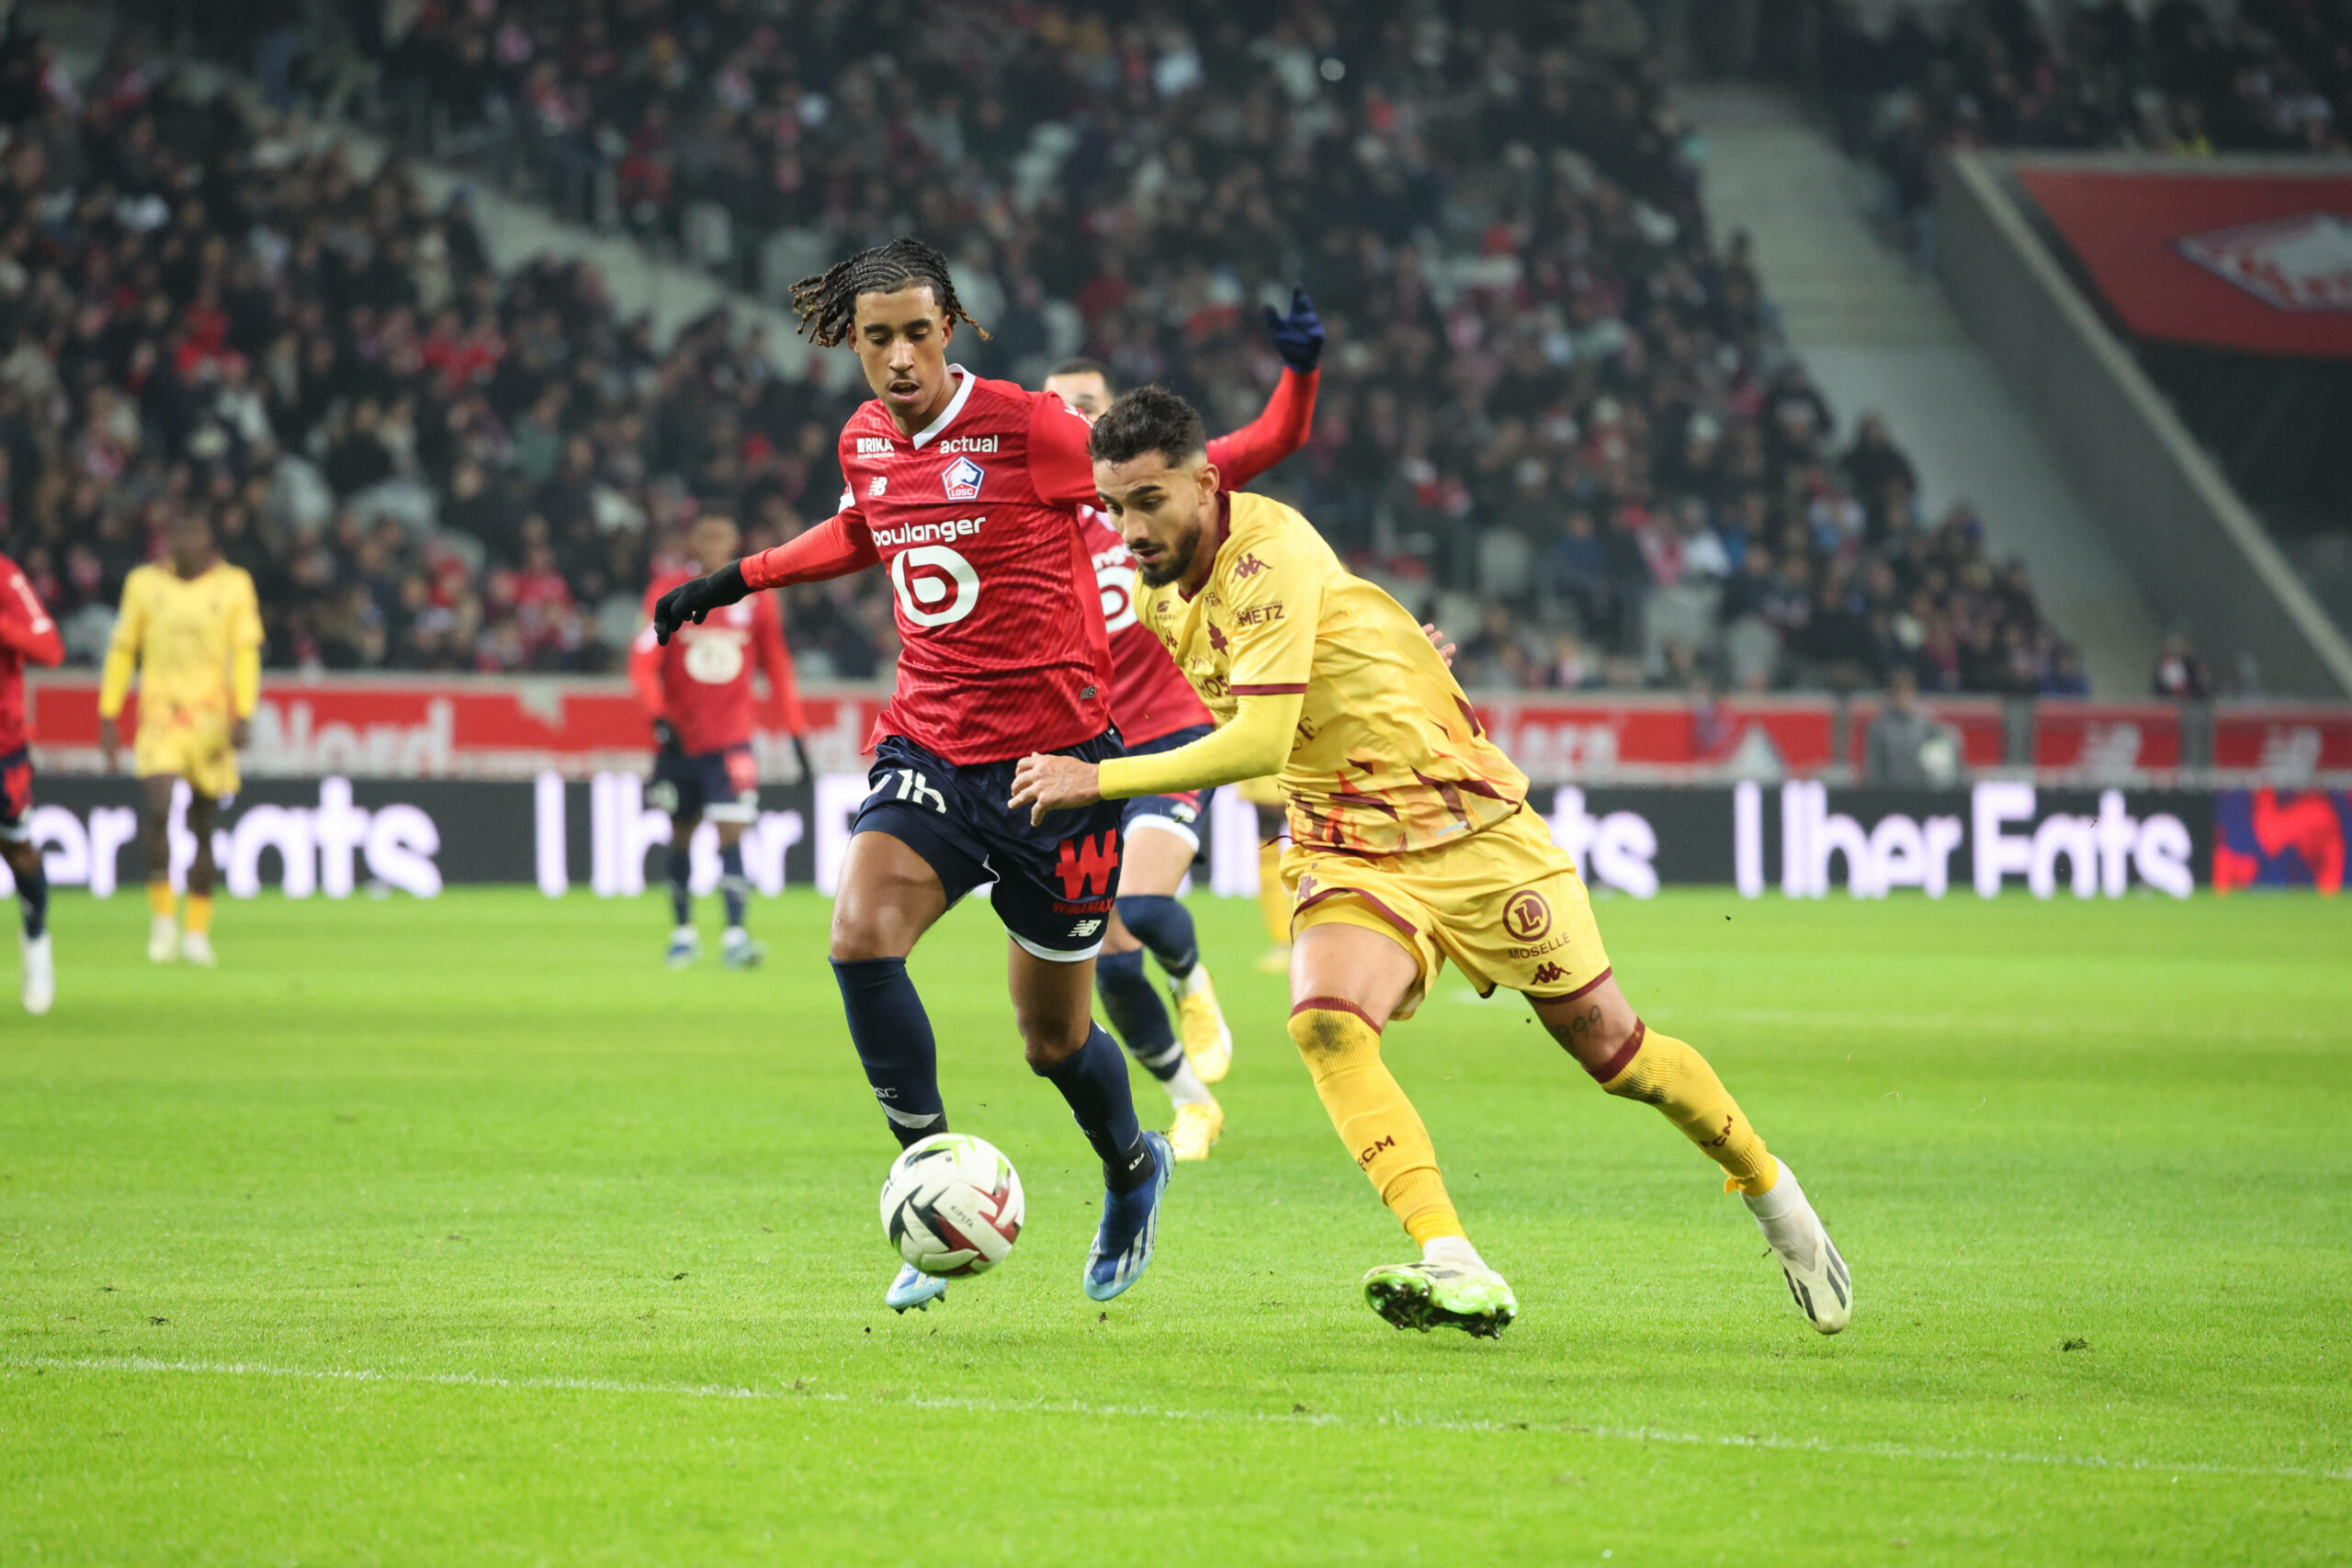 Leny Yoro (OSC Lille) gegen Simon Elisor (FC Metz)